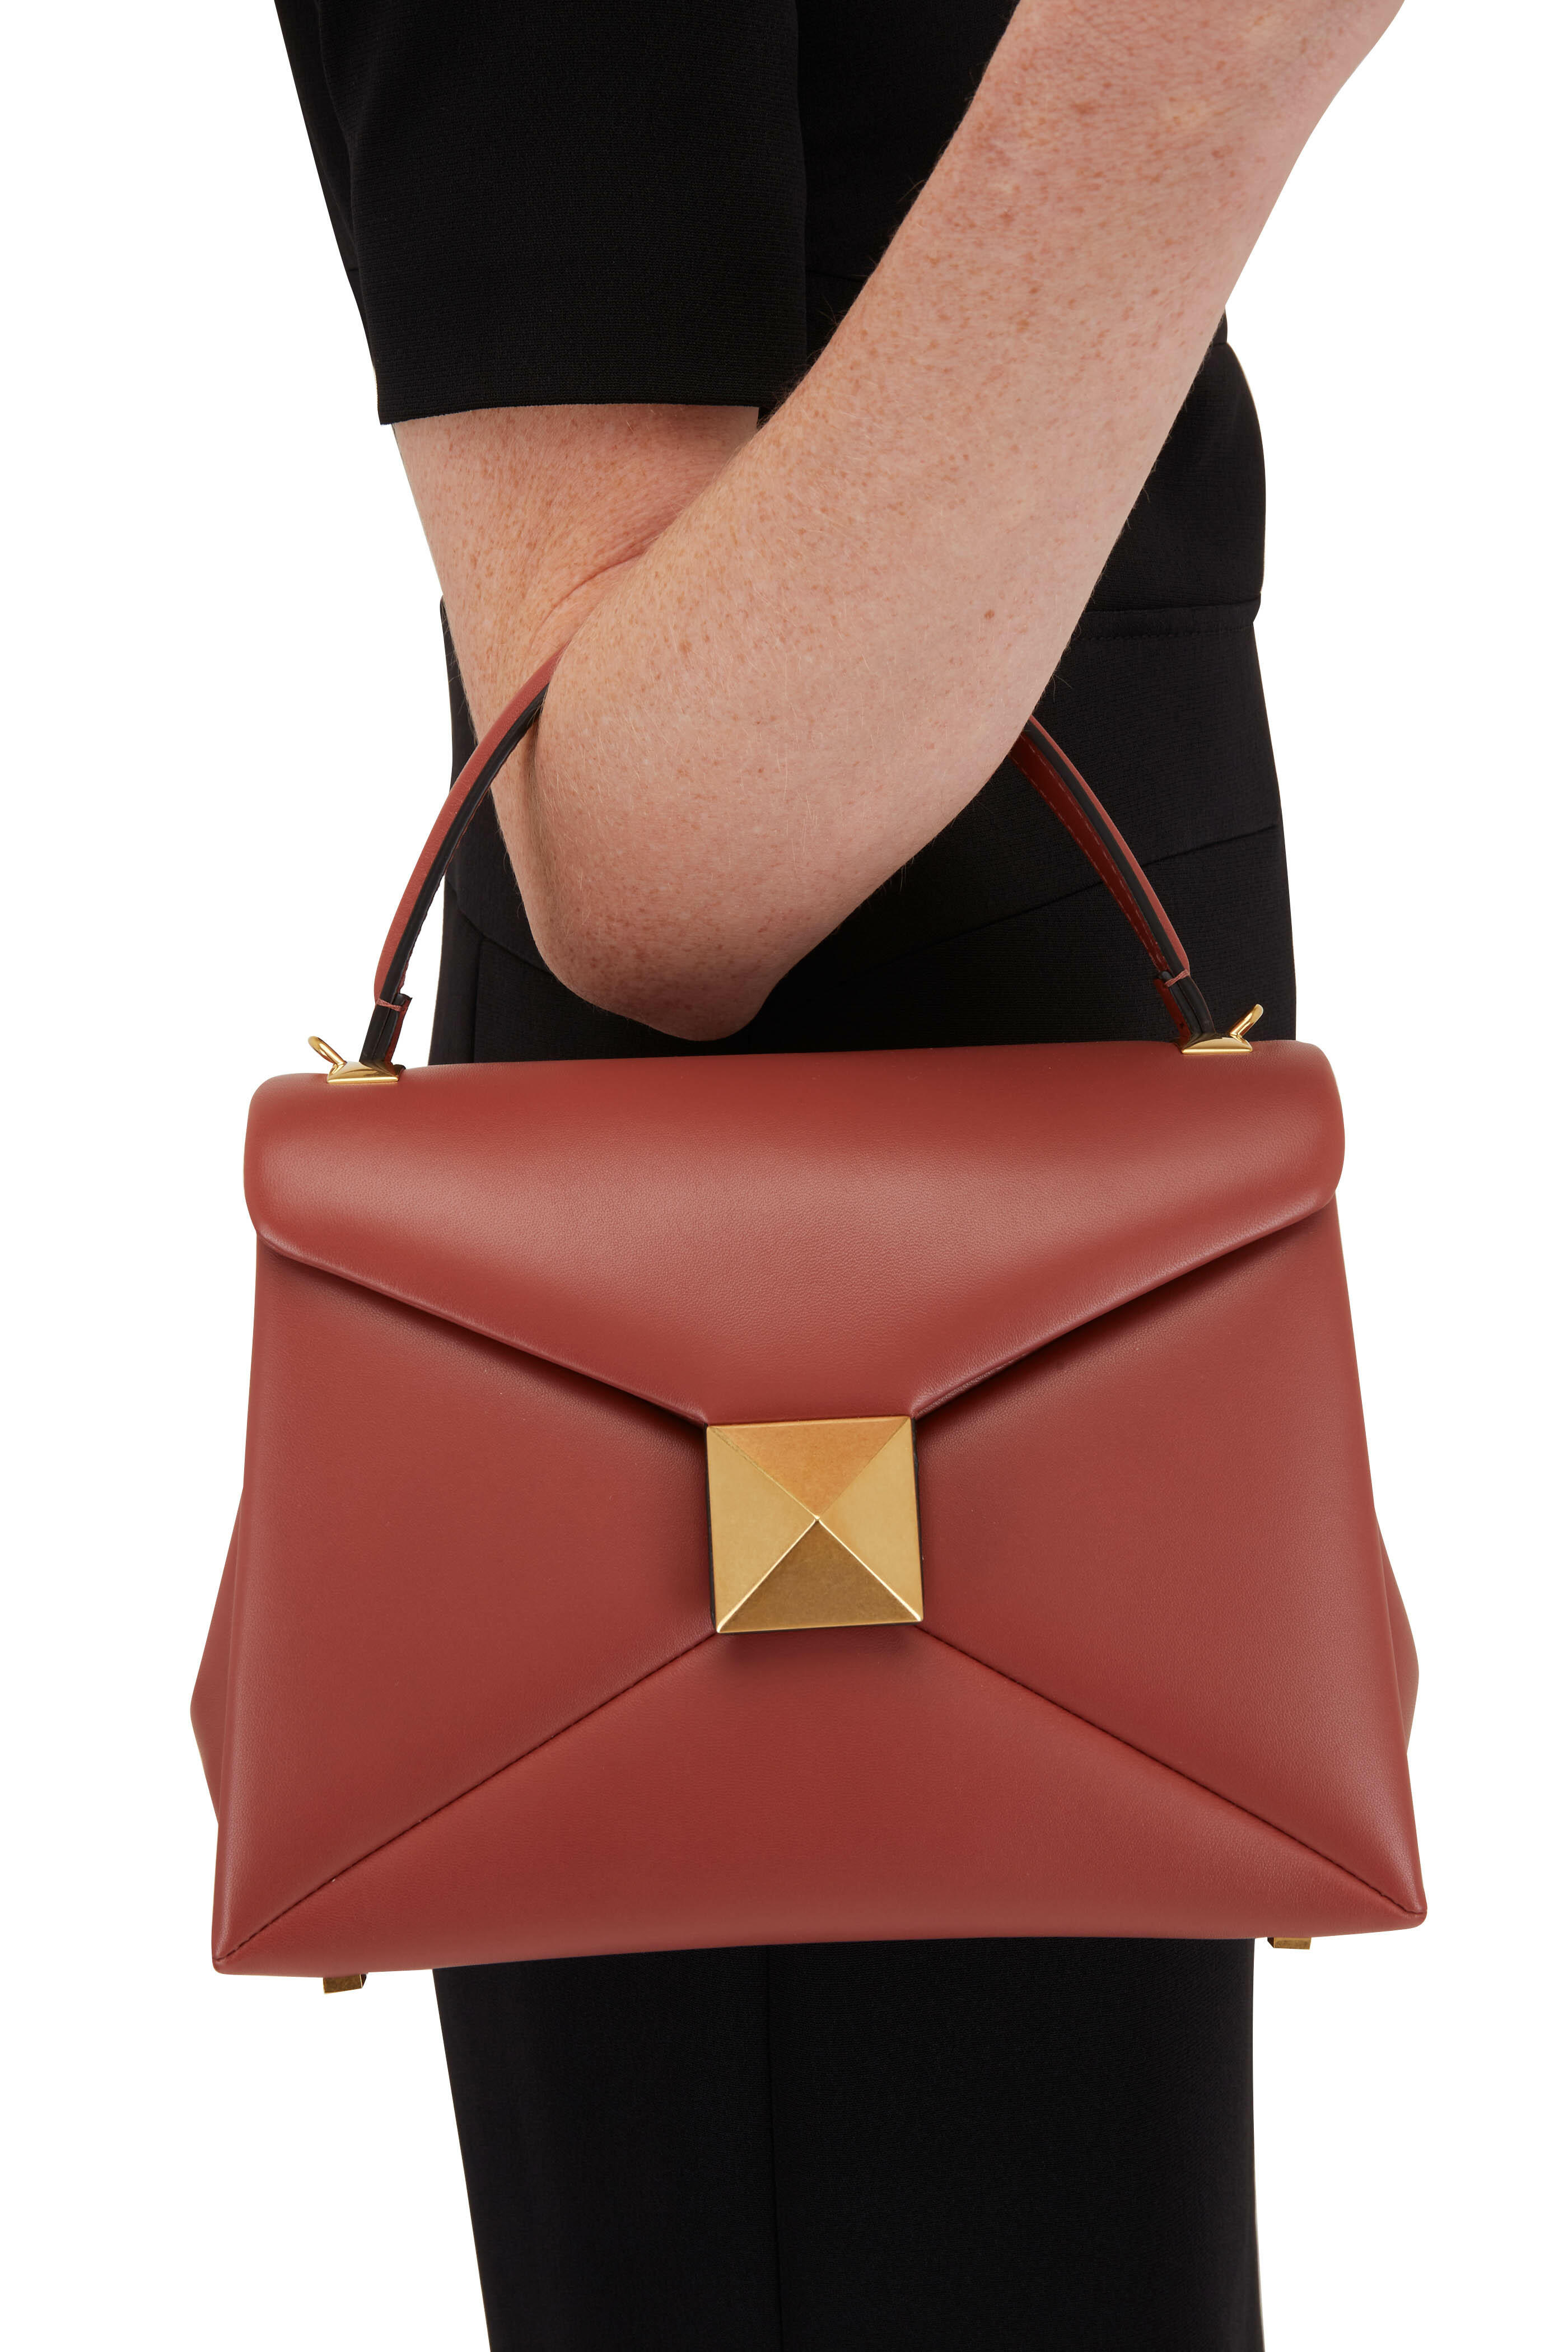 VALENTINO GARAVANI - One Stud Small Leather Handbag